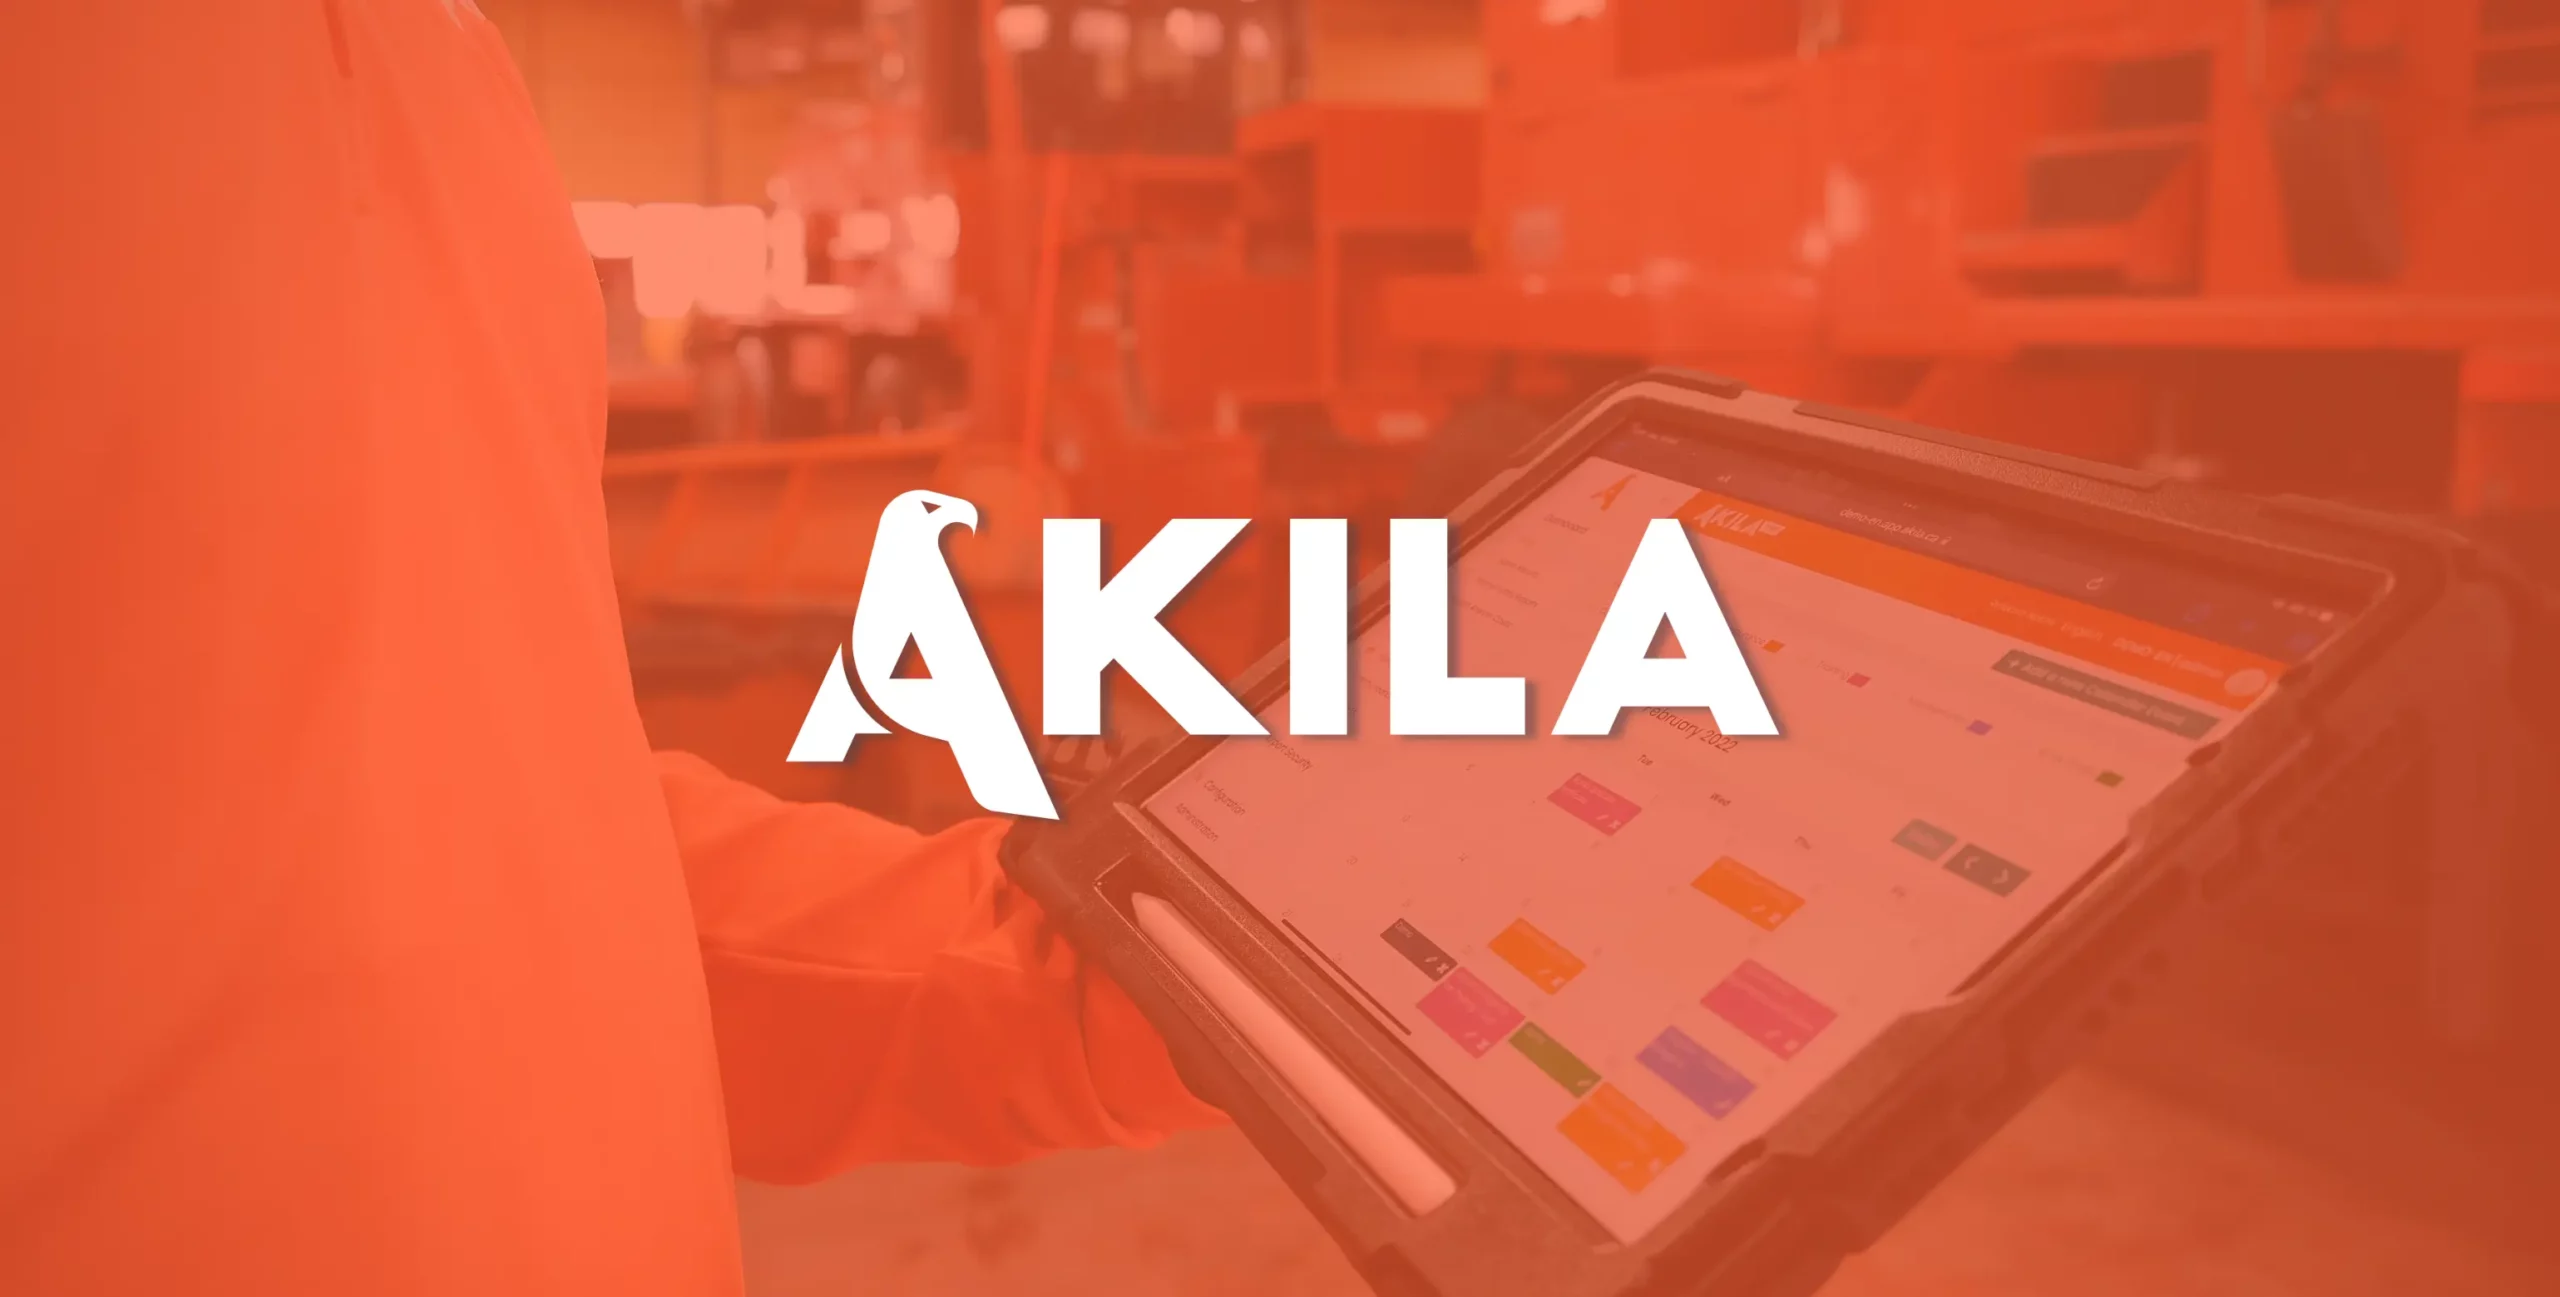 Akila, SaaS platform developed by Uzinakod and OCTANT Aviation